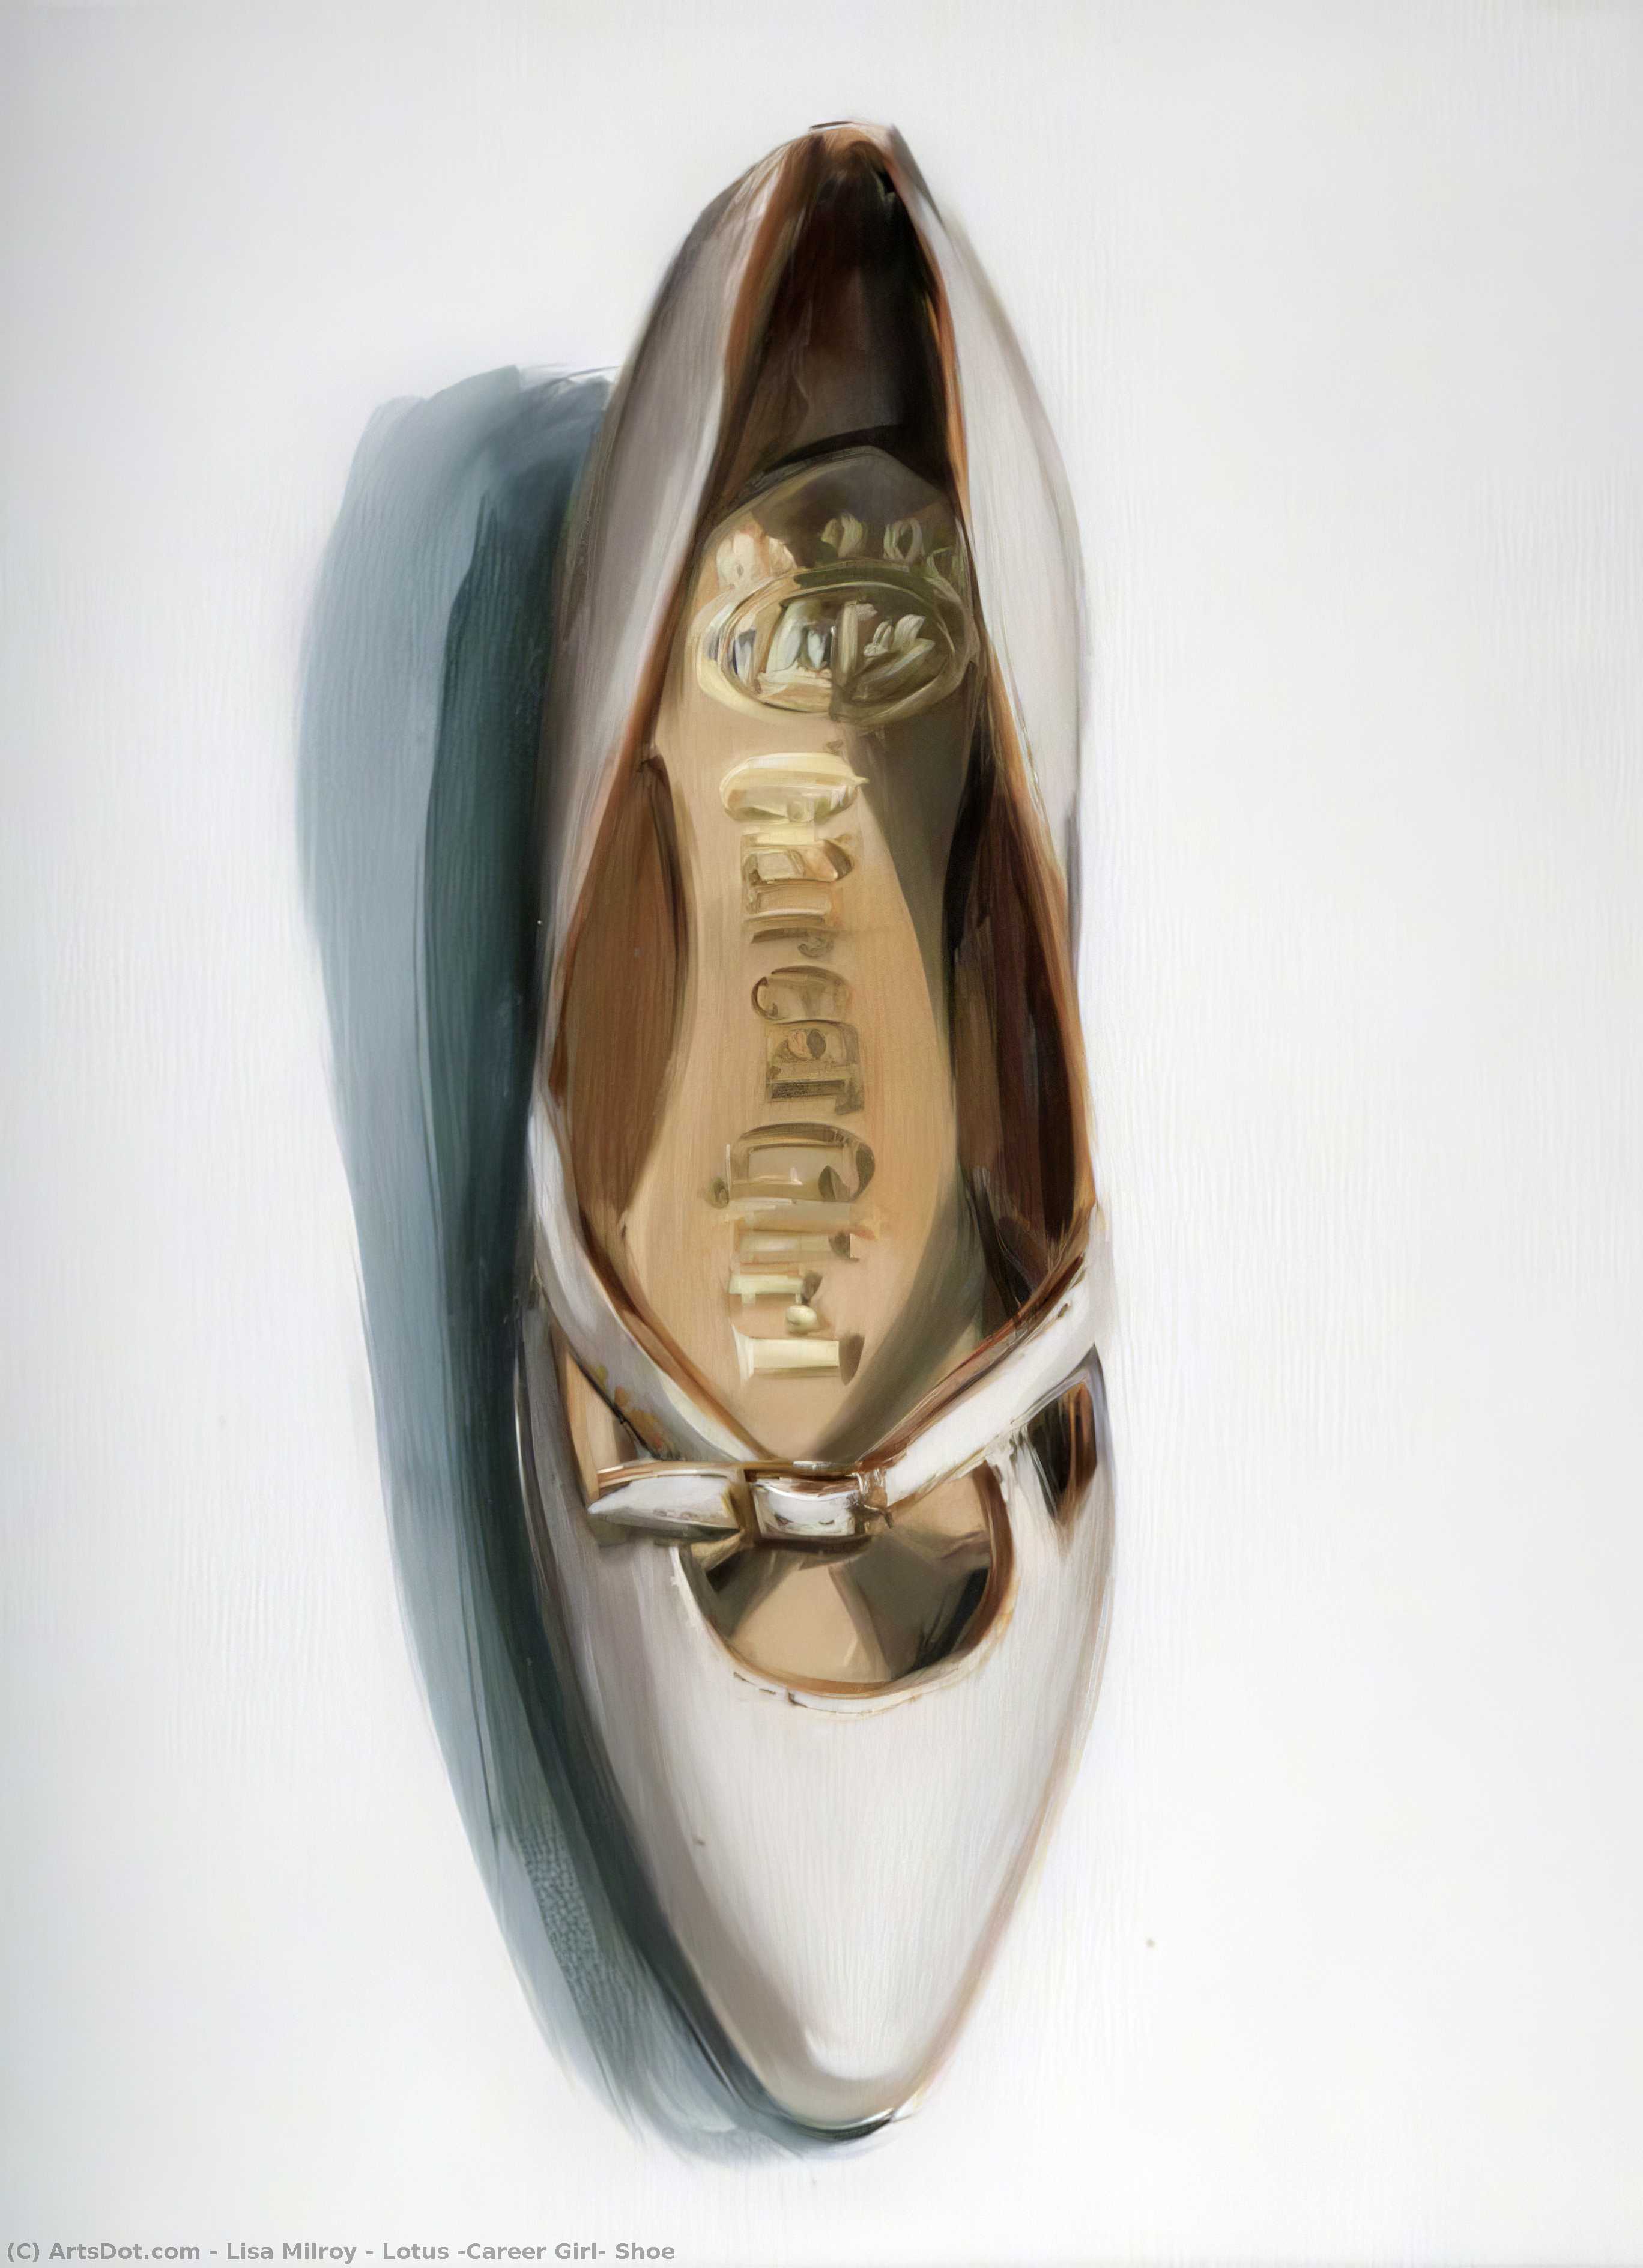 Lotus `Career Girl` Shoe, 2002 by Lisa Milroy Lisa Milroy | ArtsDot.com